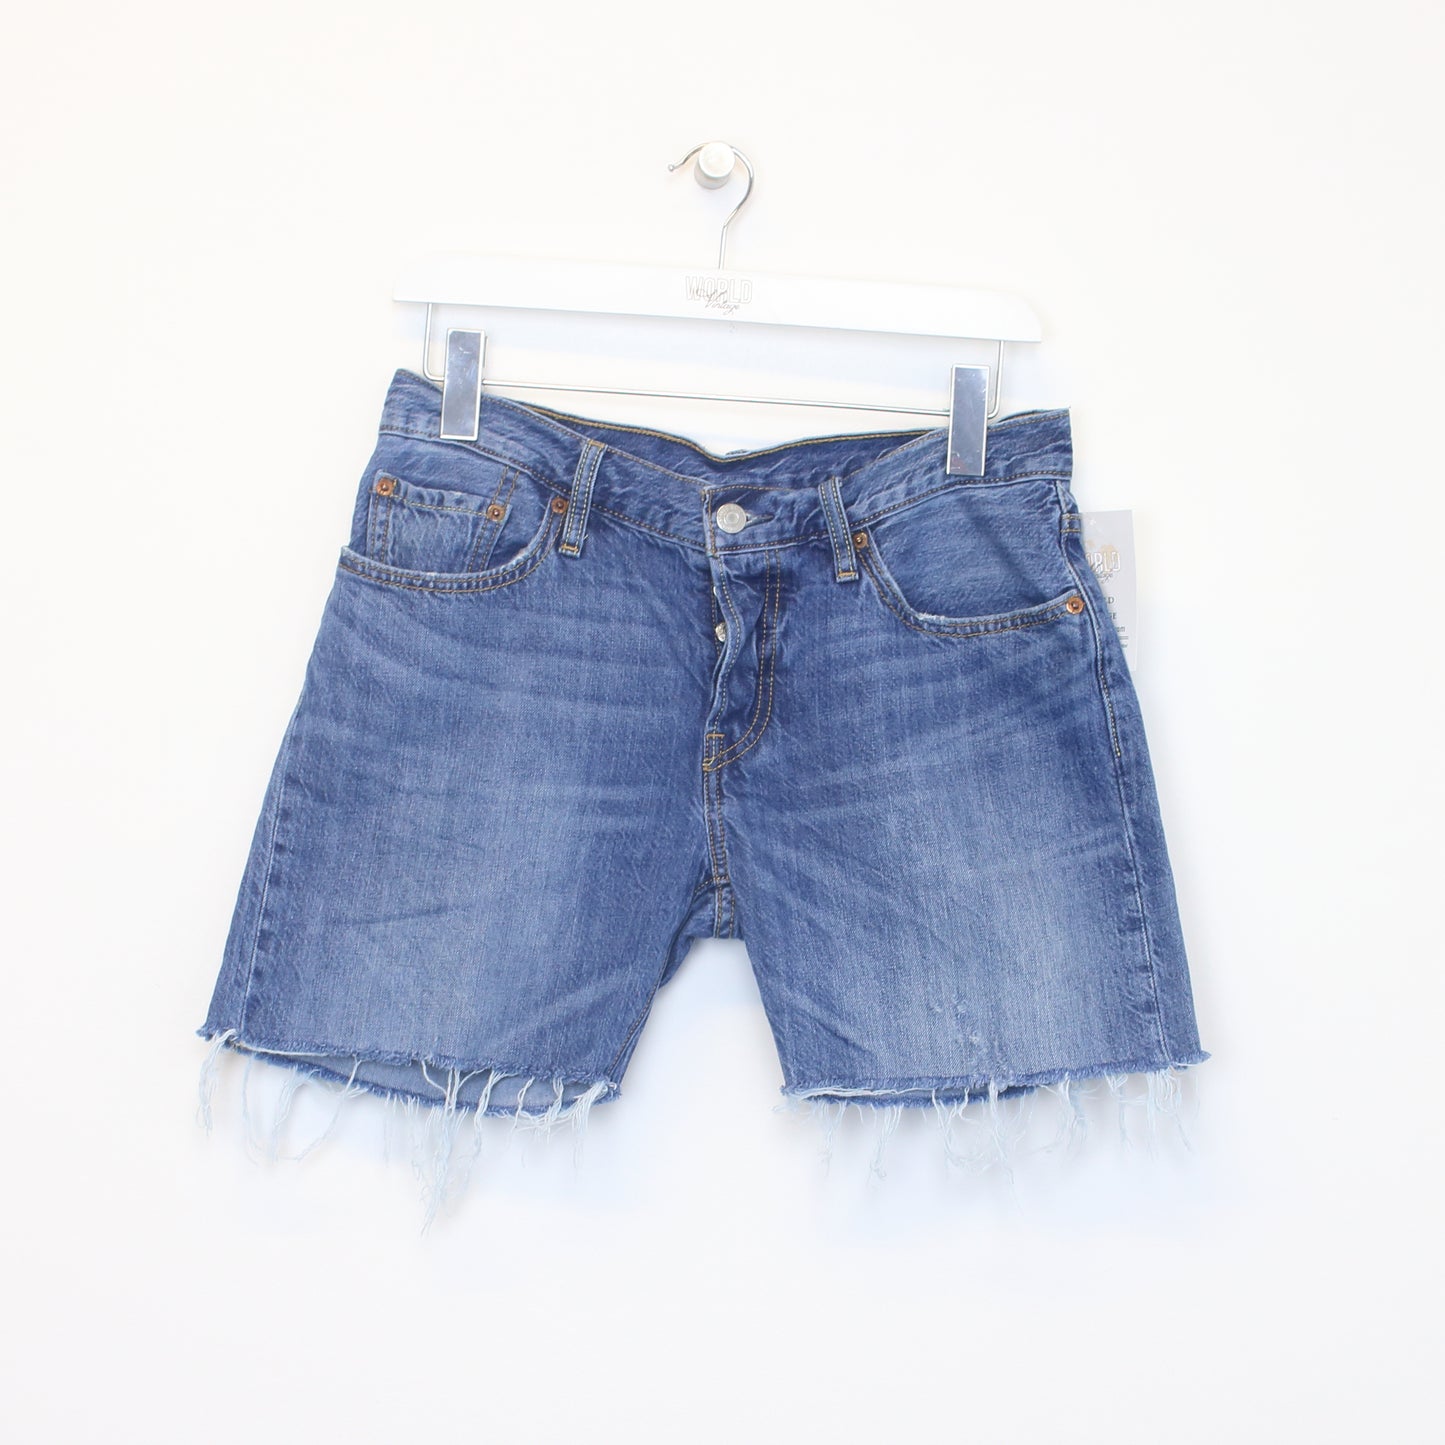 Vintage Levis Shorts in blue. Best fits W30 L15